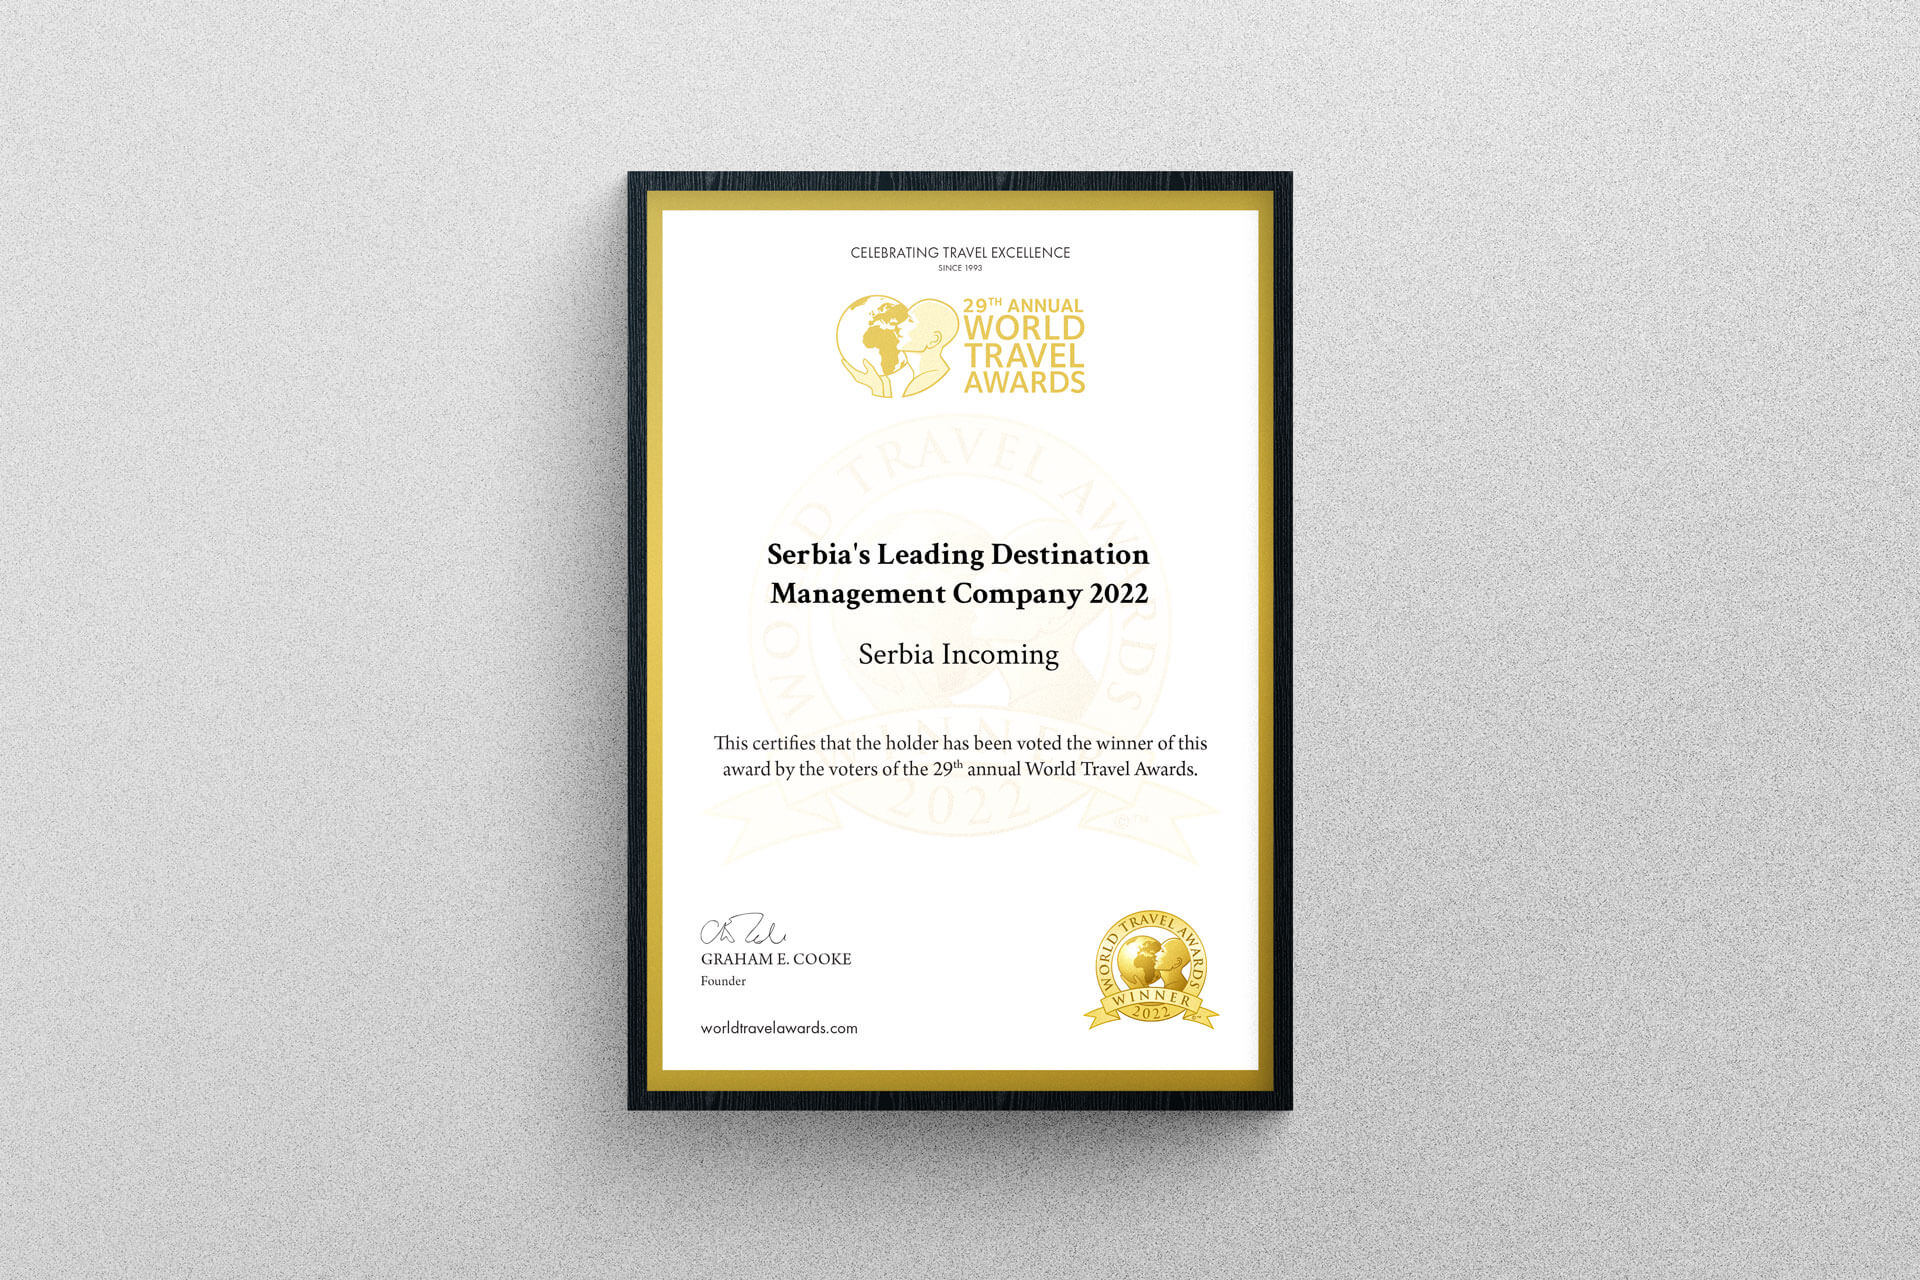 Serbia's Leading Destination Management Company 2022 certificate